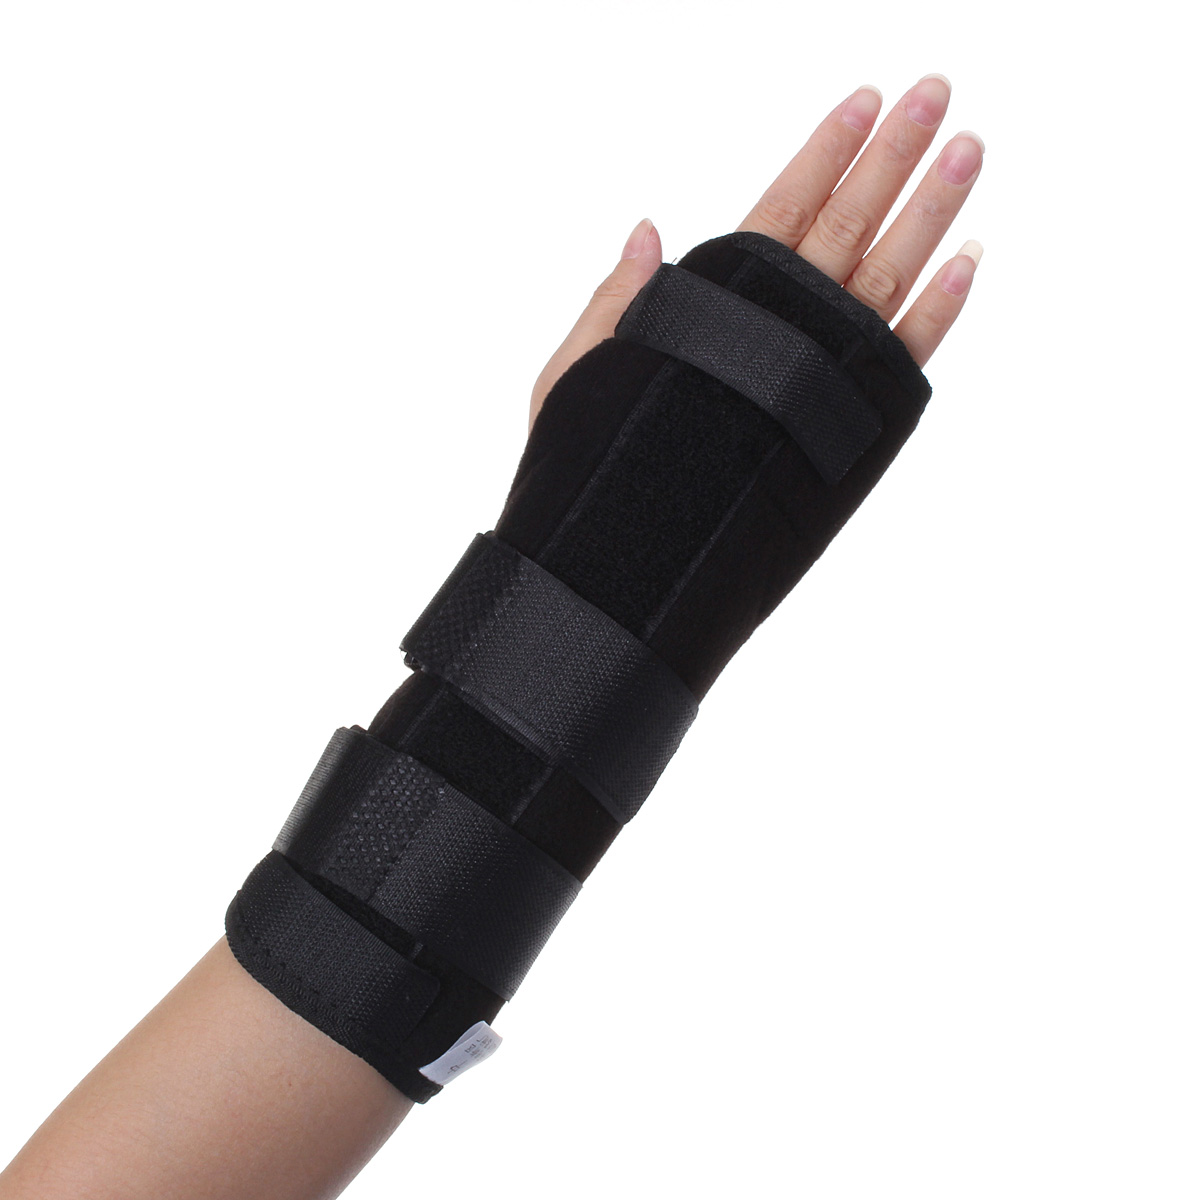 Hand wrist support   walmart.com